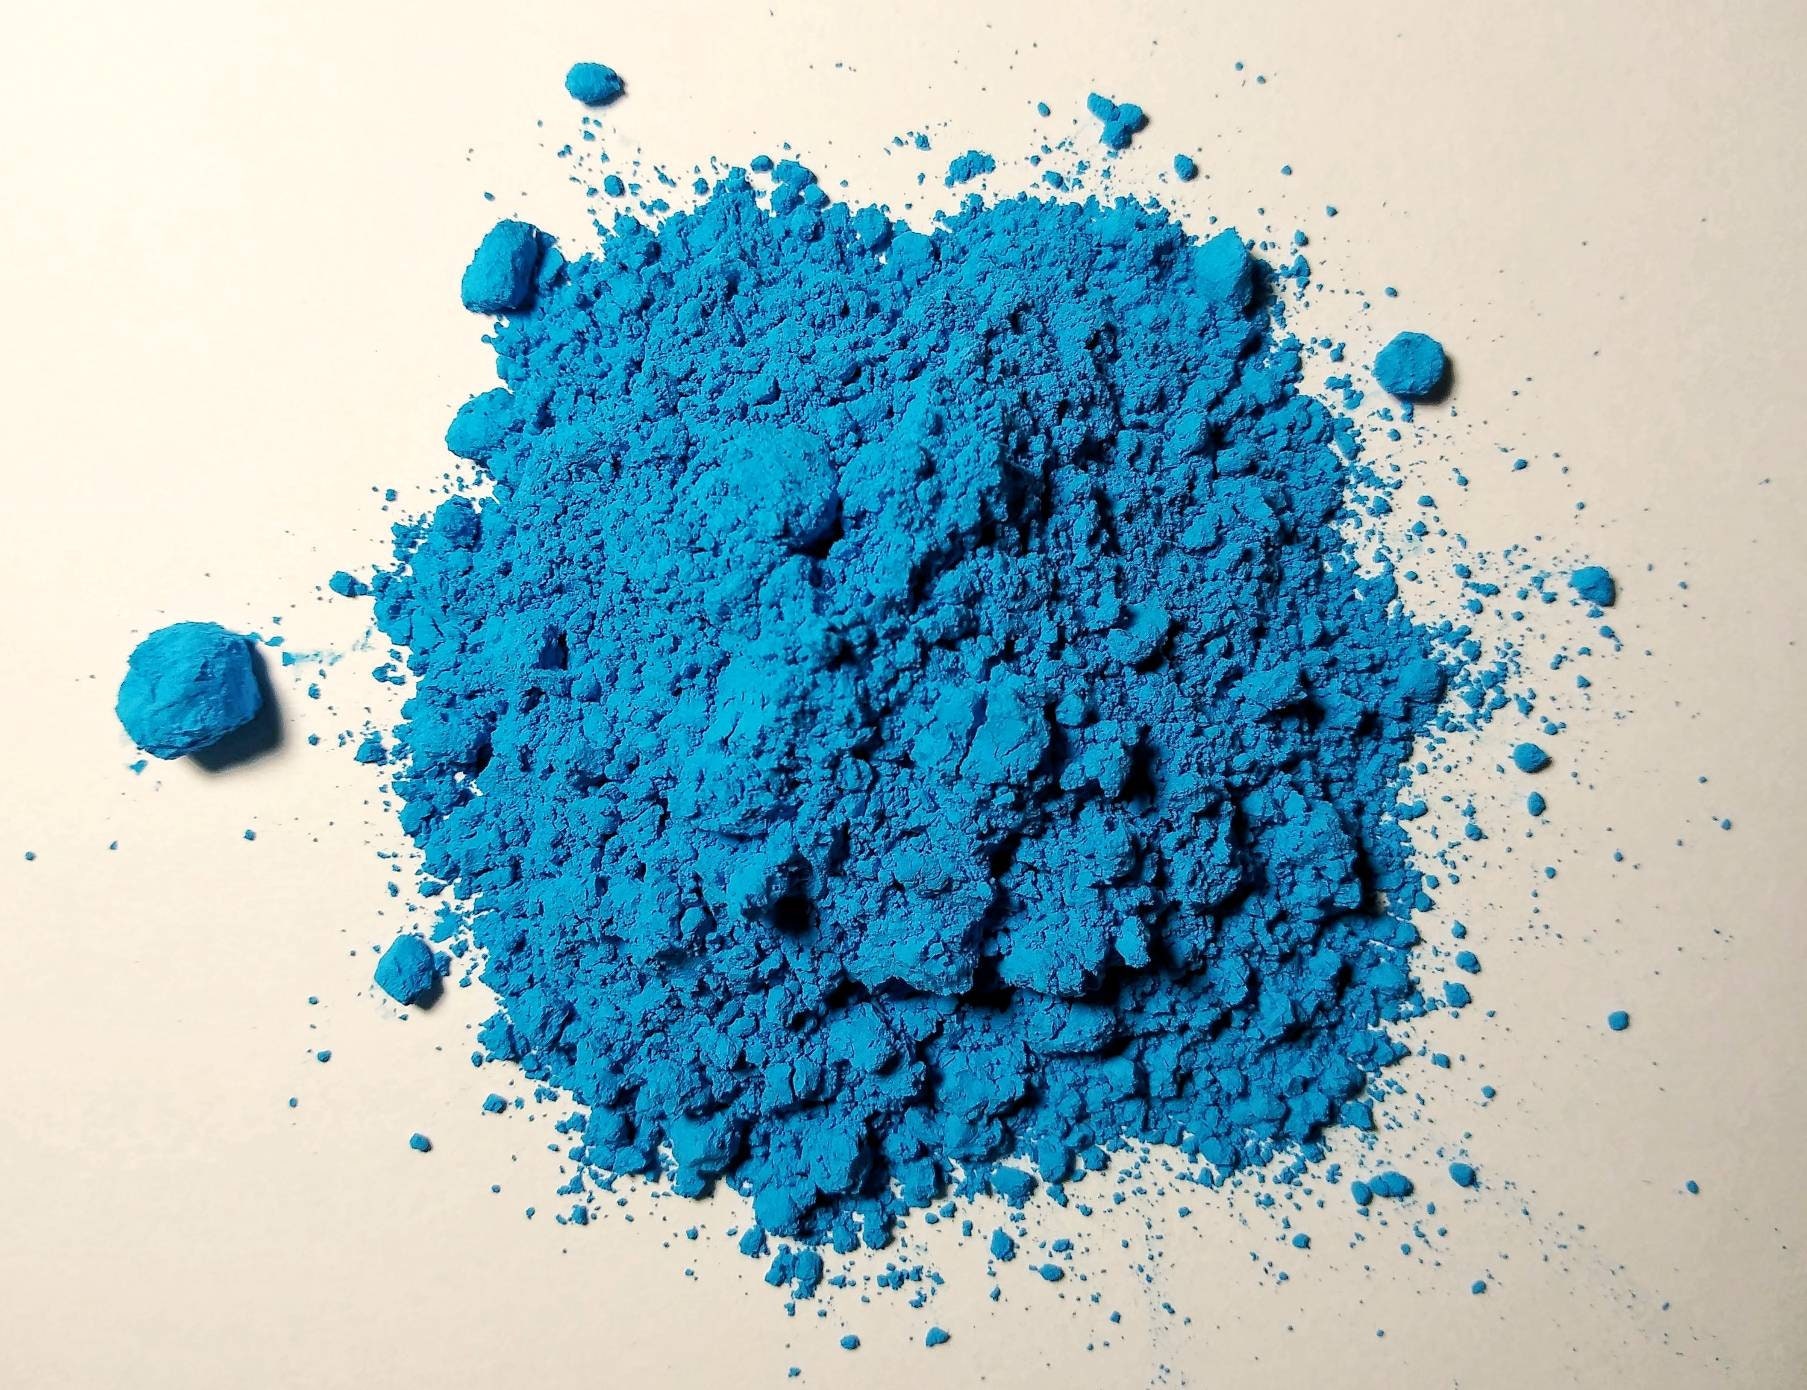 Matte Cobalt Blue Oxide Pigment Powder